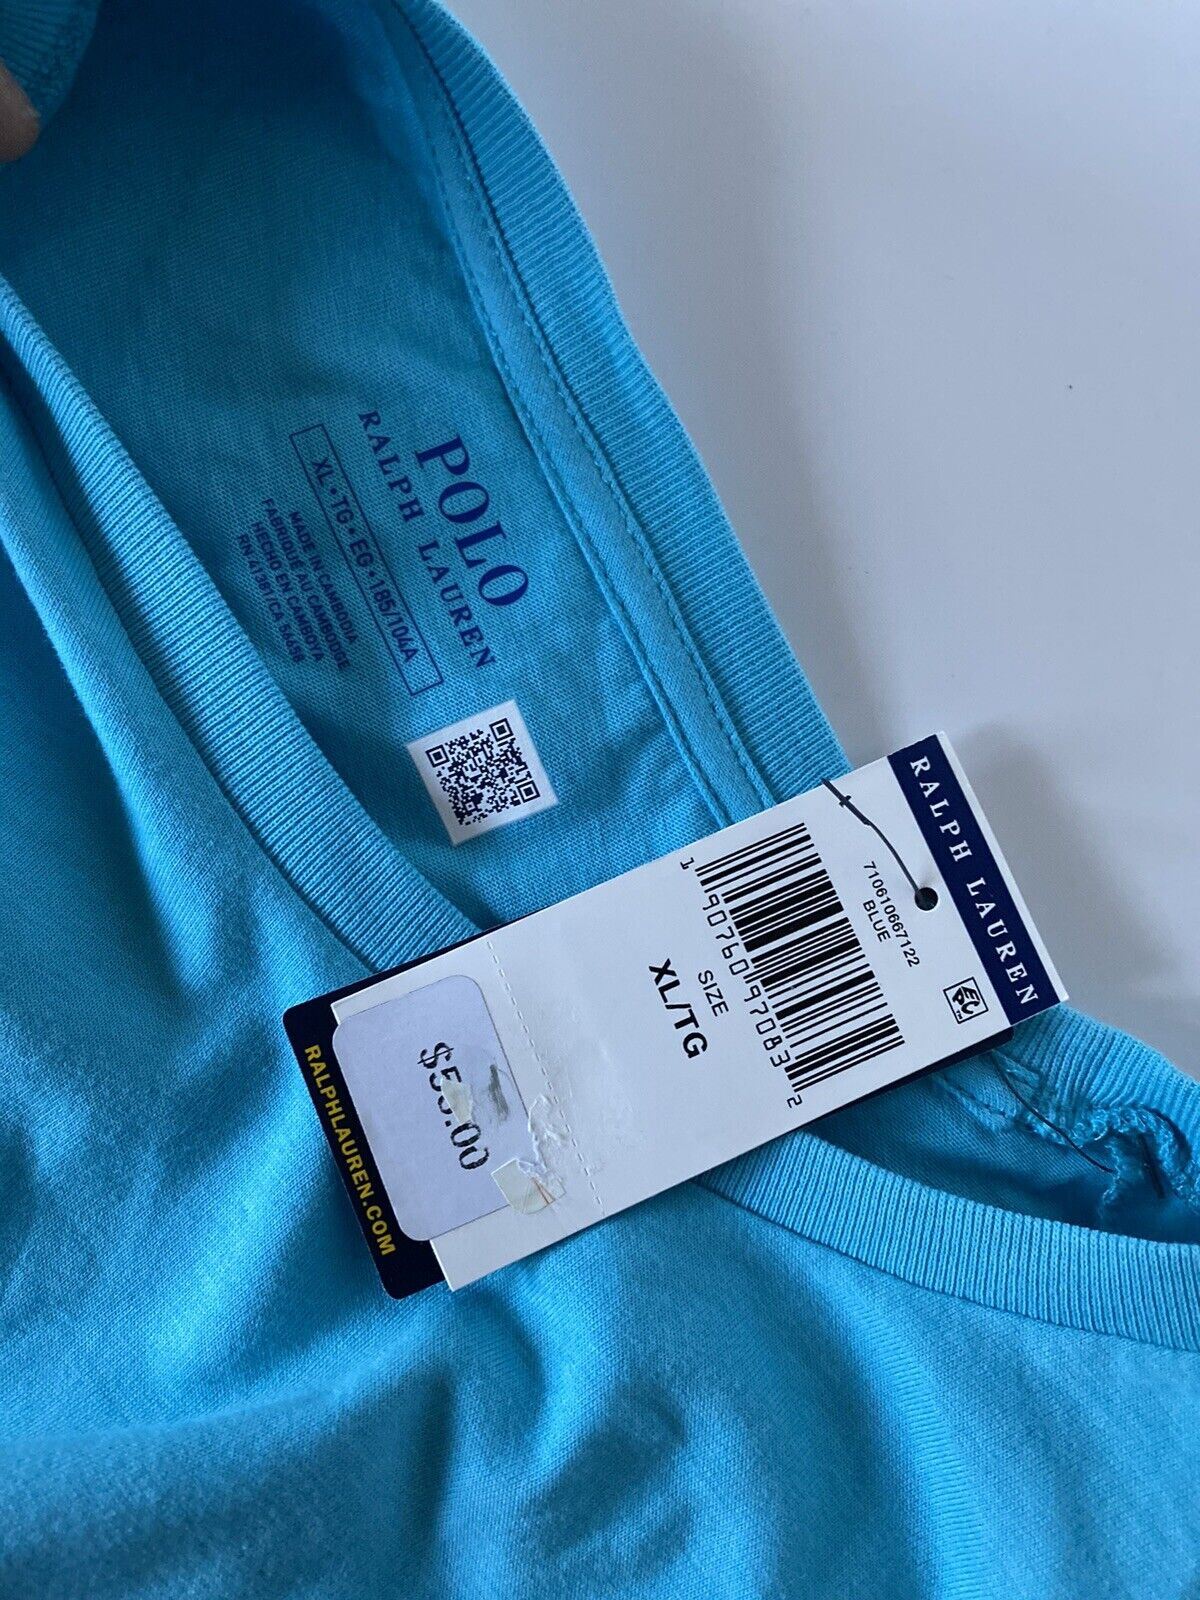 Neu mit Etikett: Polo Ralph Lauren Kurzarm-Baumwoll-T-Shirt, Blau, XL 